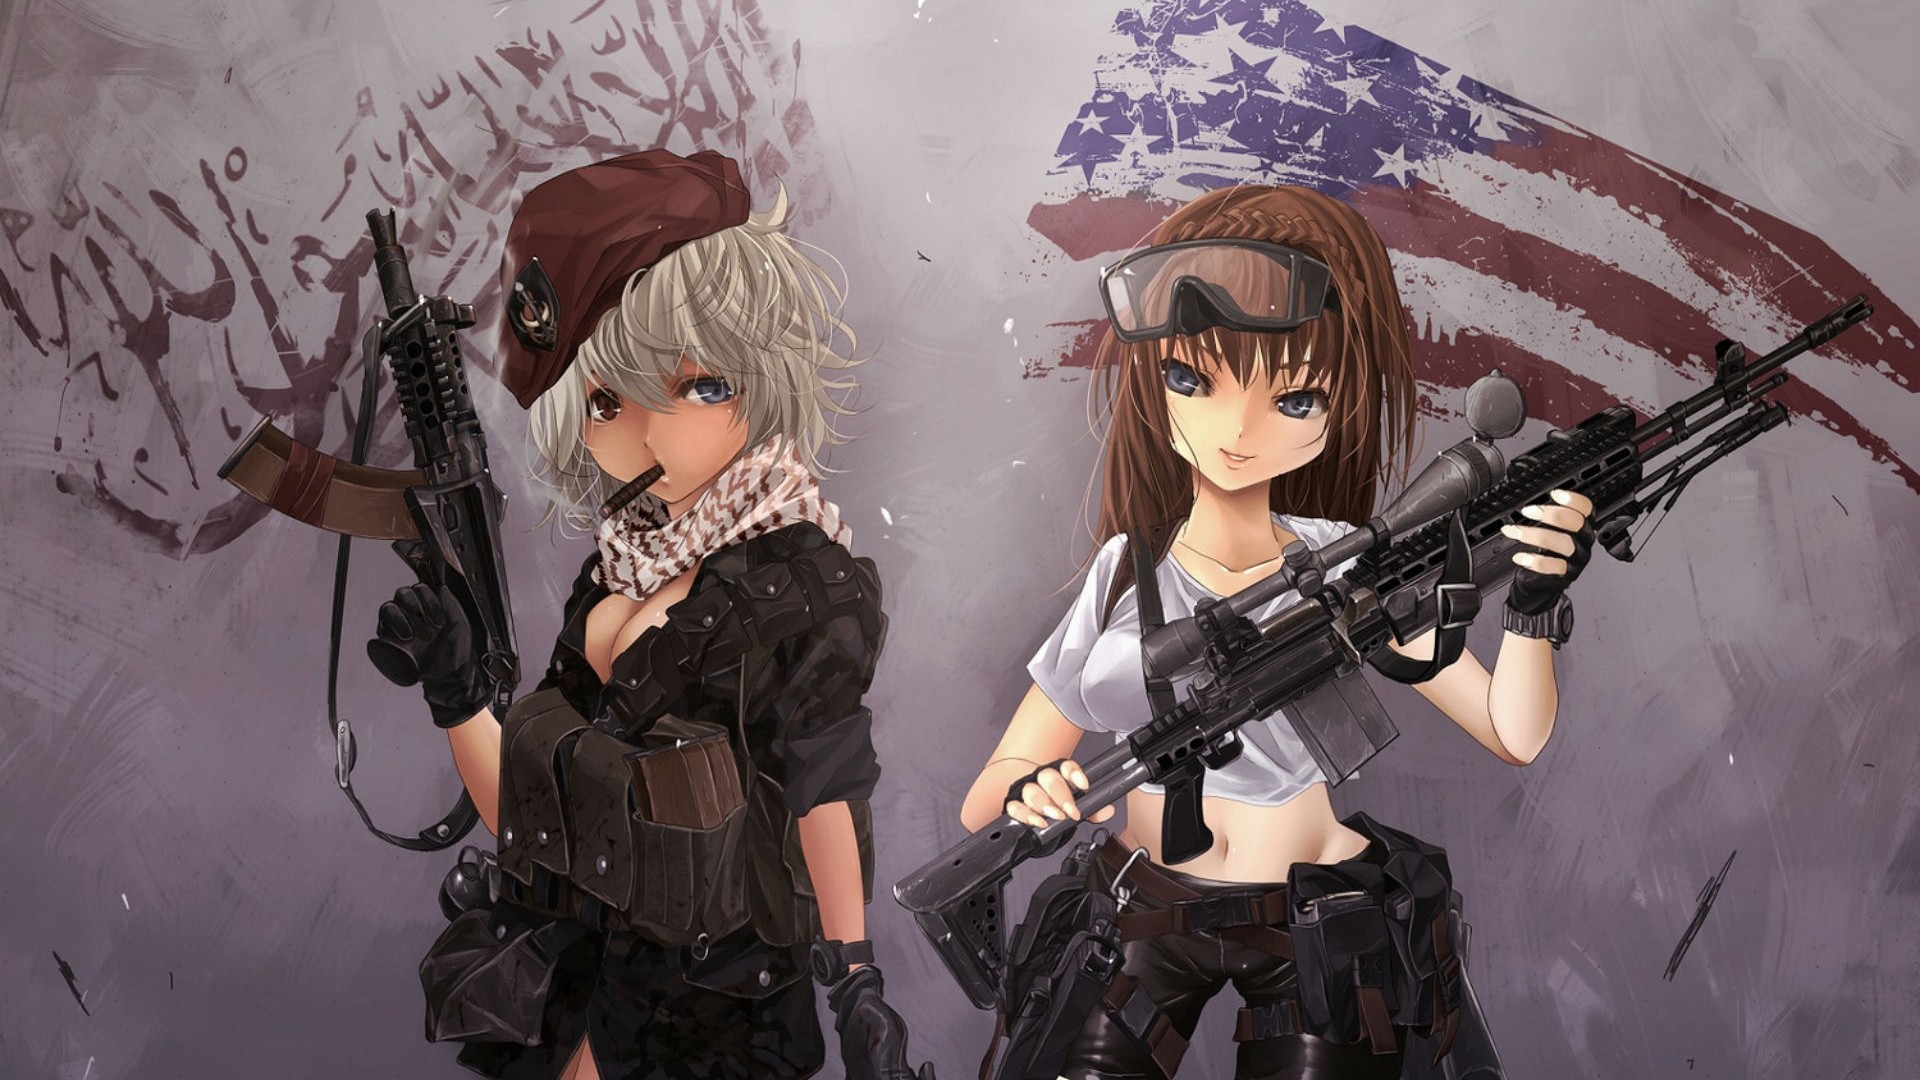 Anime Girls With Guns Wallpaper Image